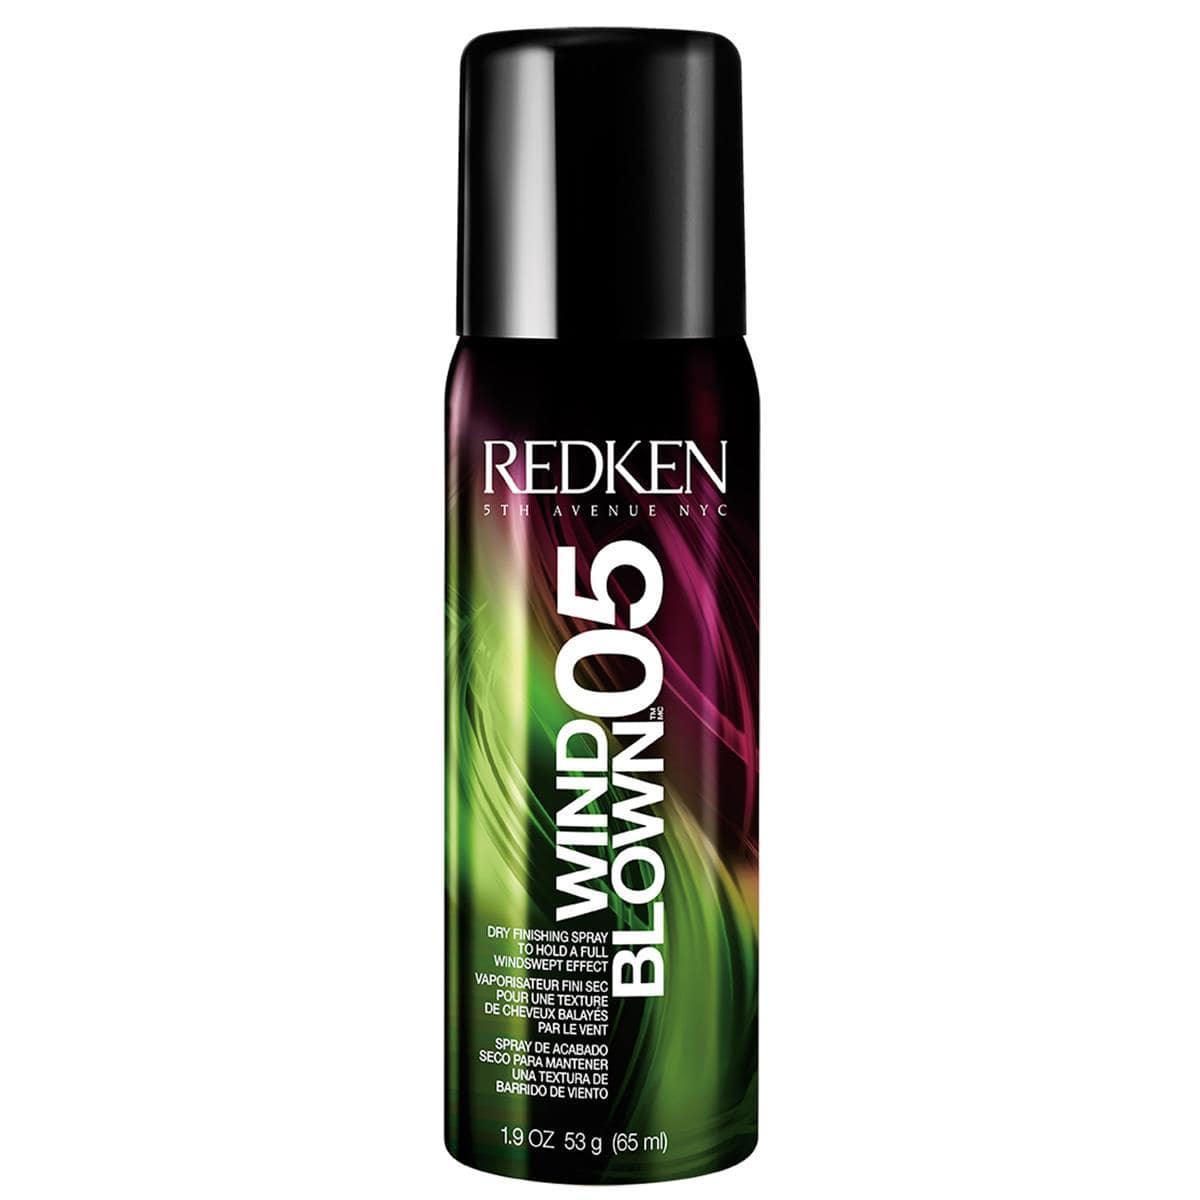 REDKEN_Wind Blown 05 dry finishing hairspray 1.9oz_Cosmetic World